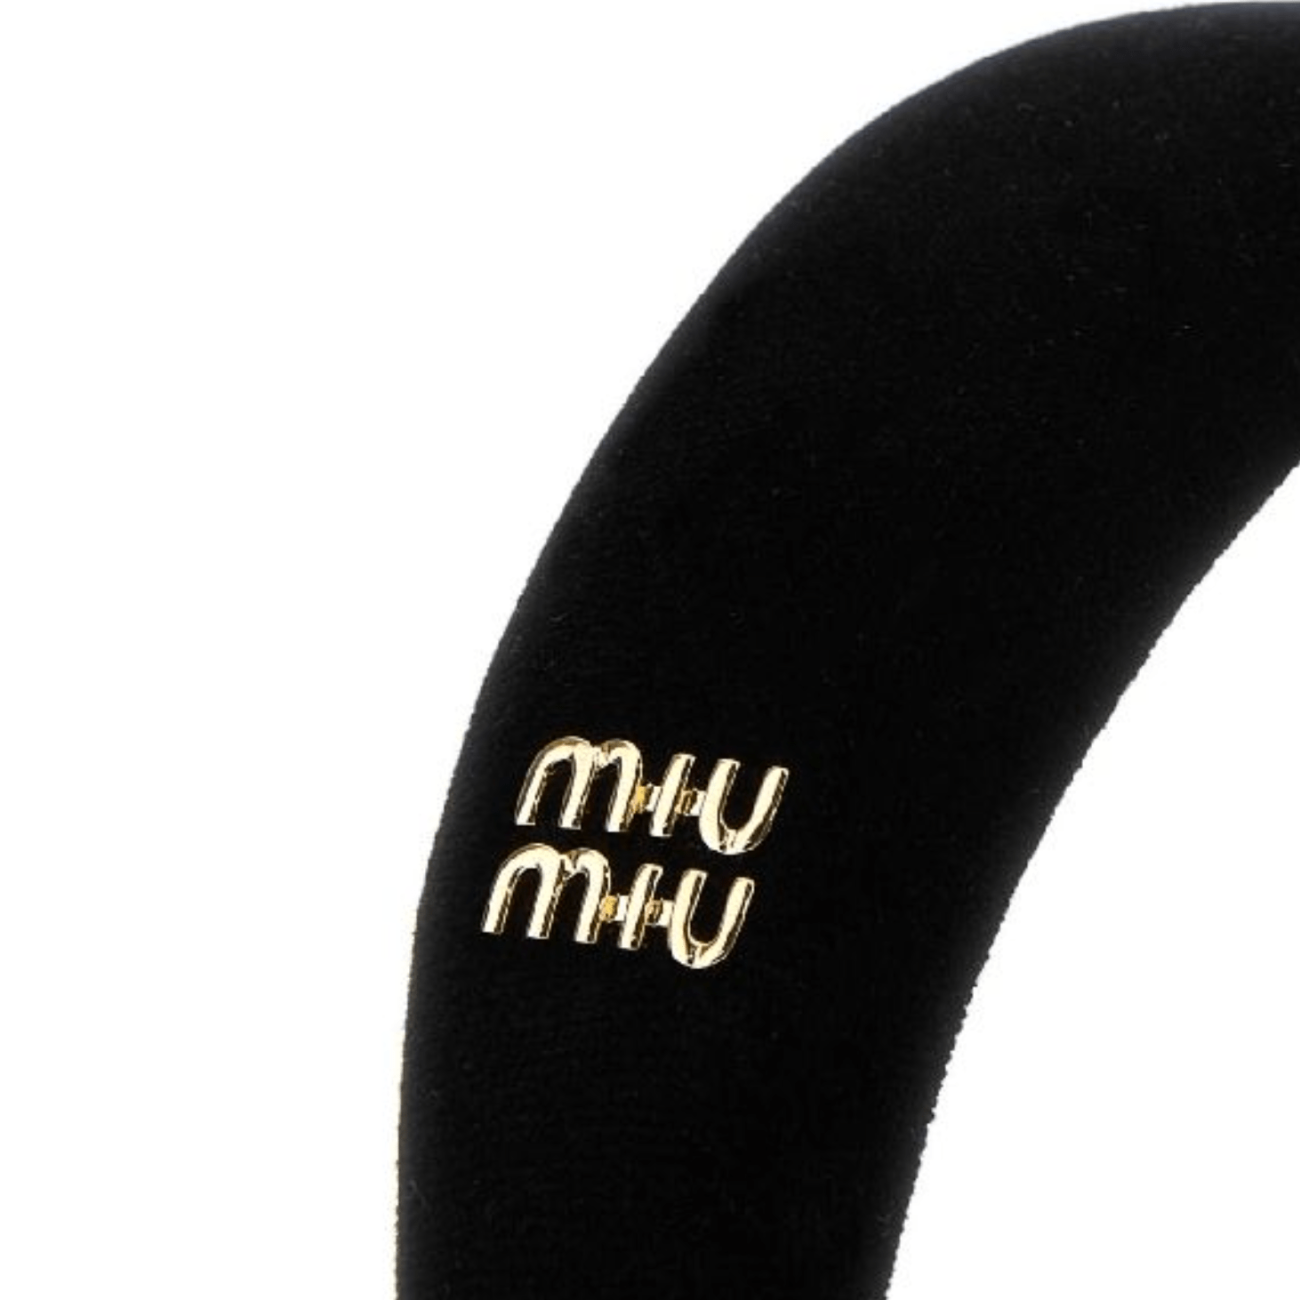 MIU MIU Metal logo decorated velvet hairband